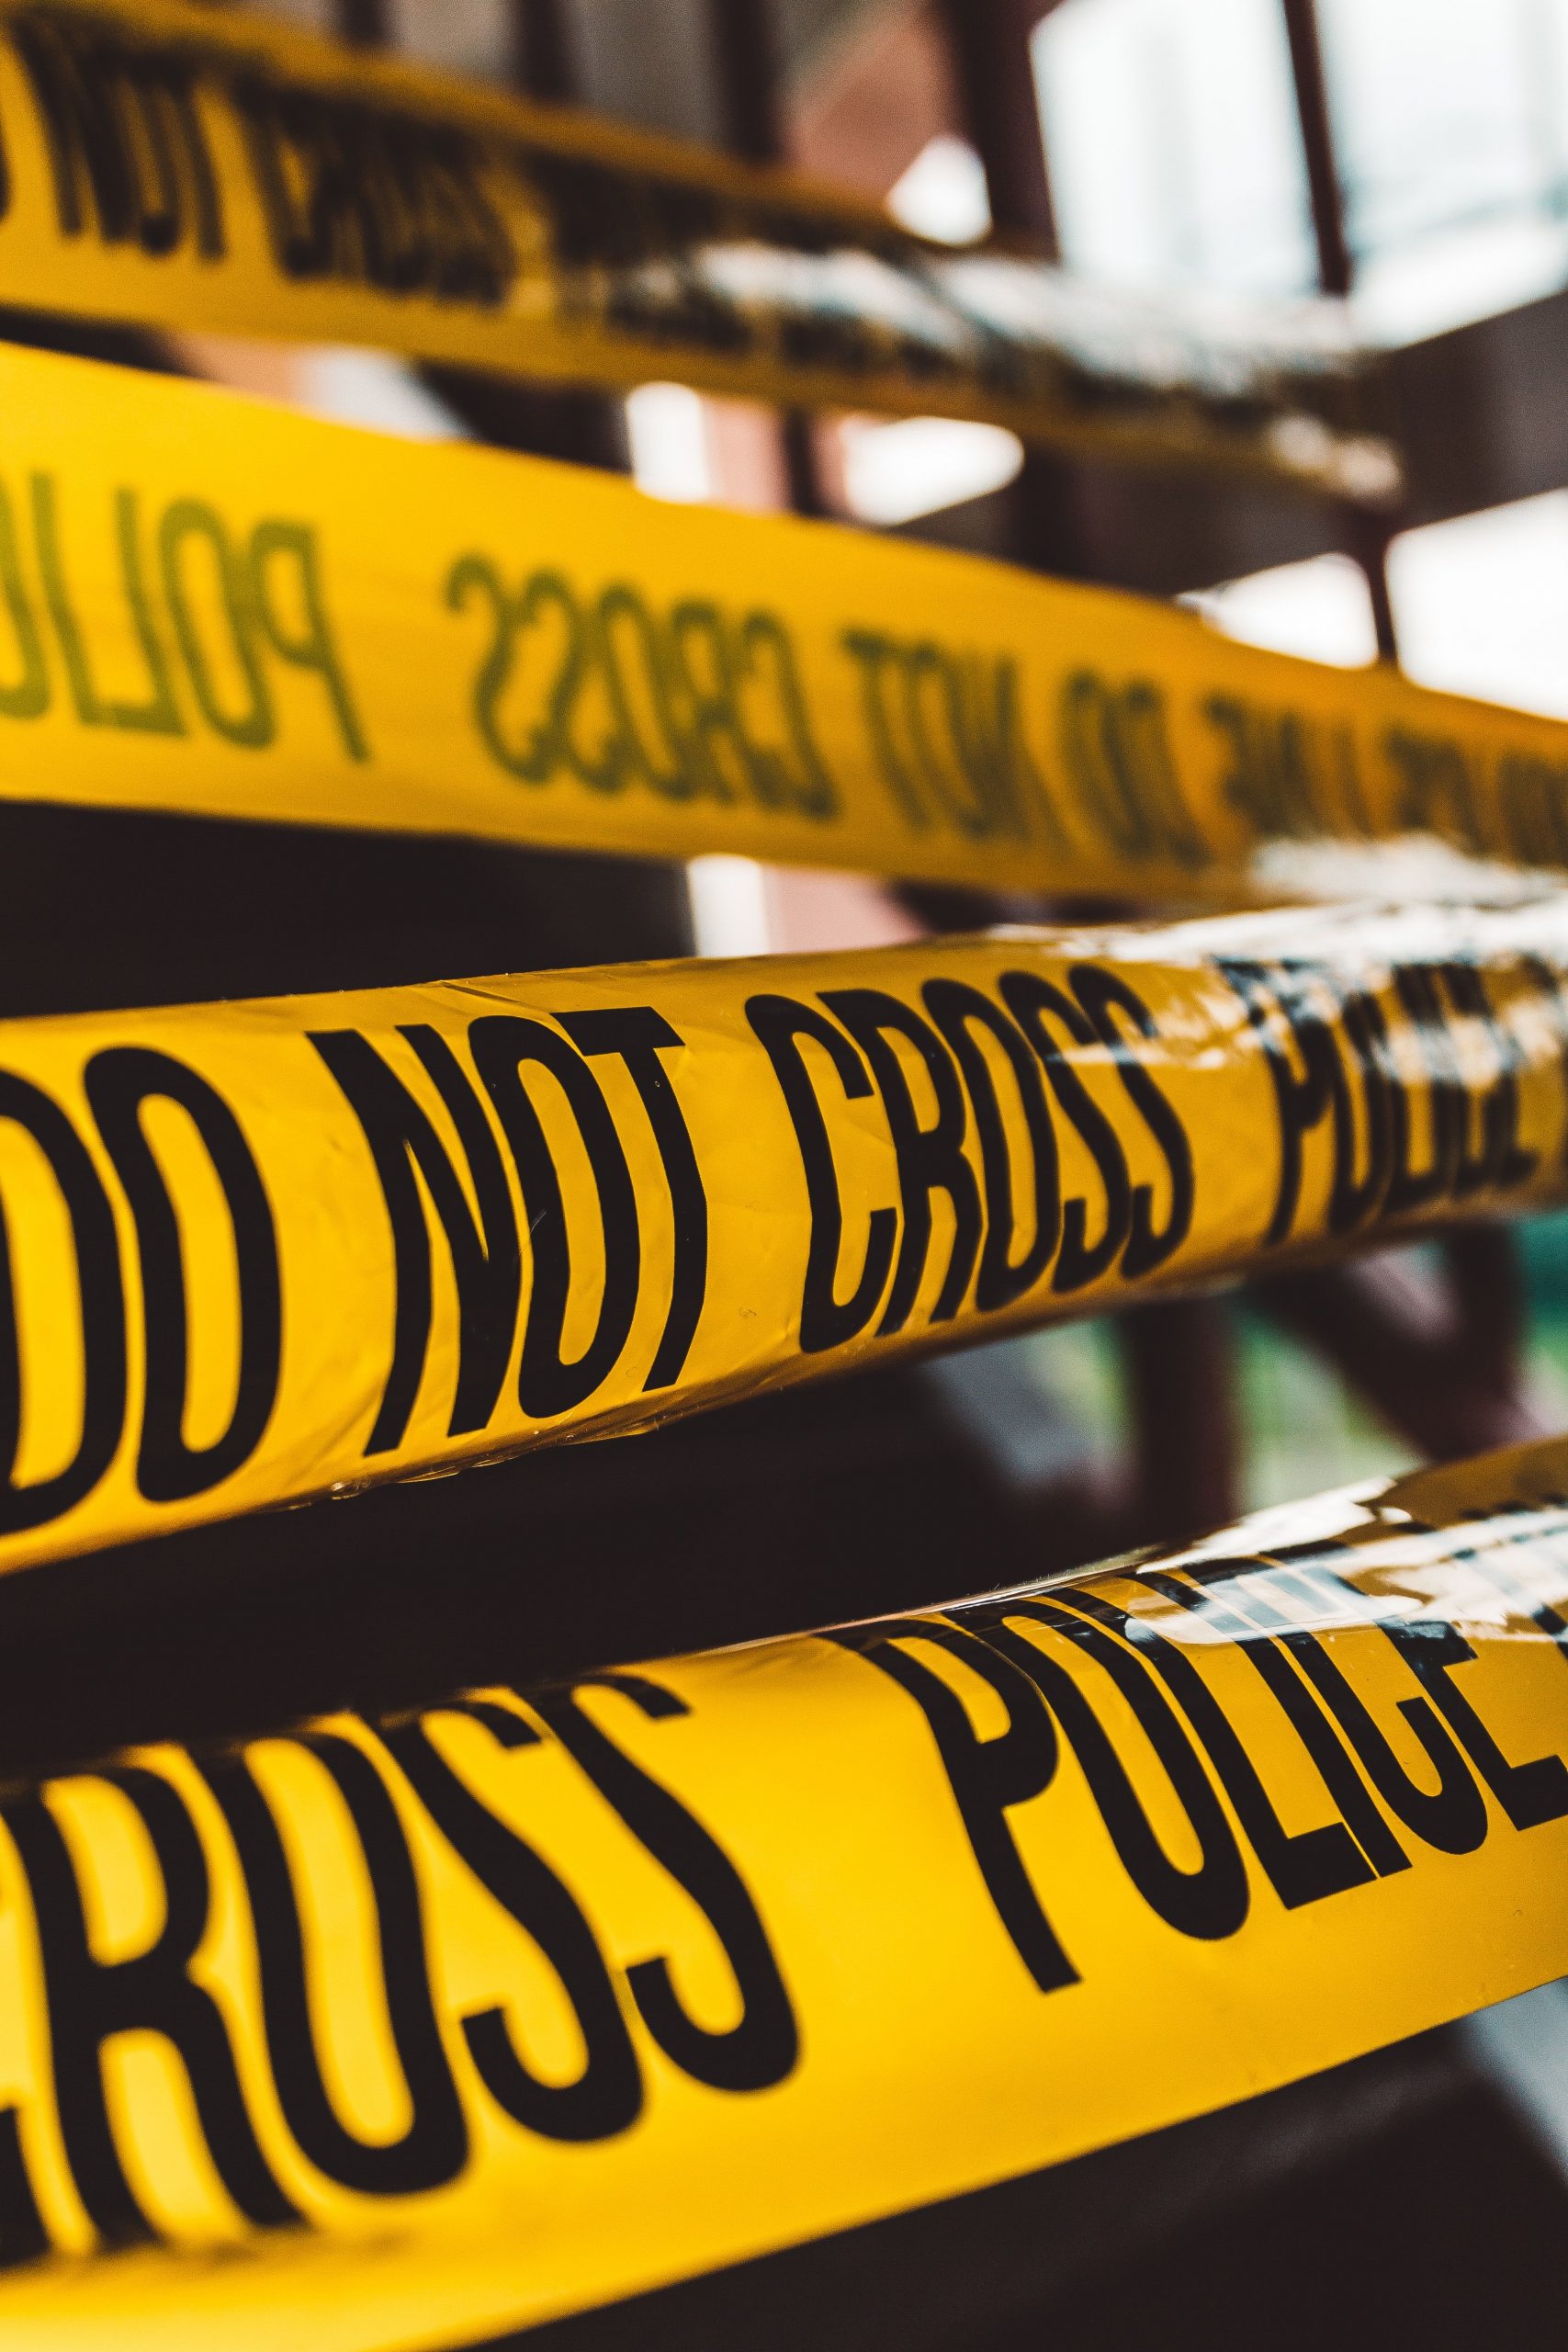 Purdue University homicide: What we know so far